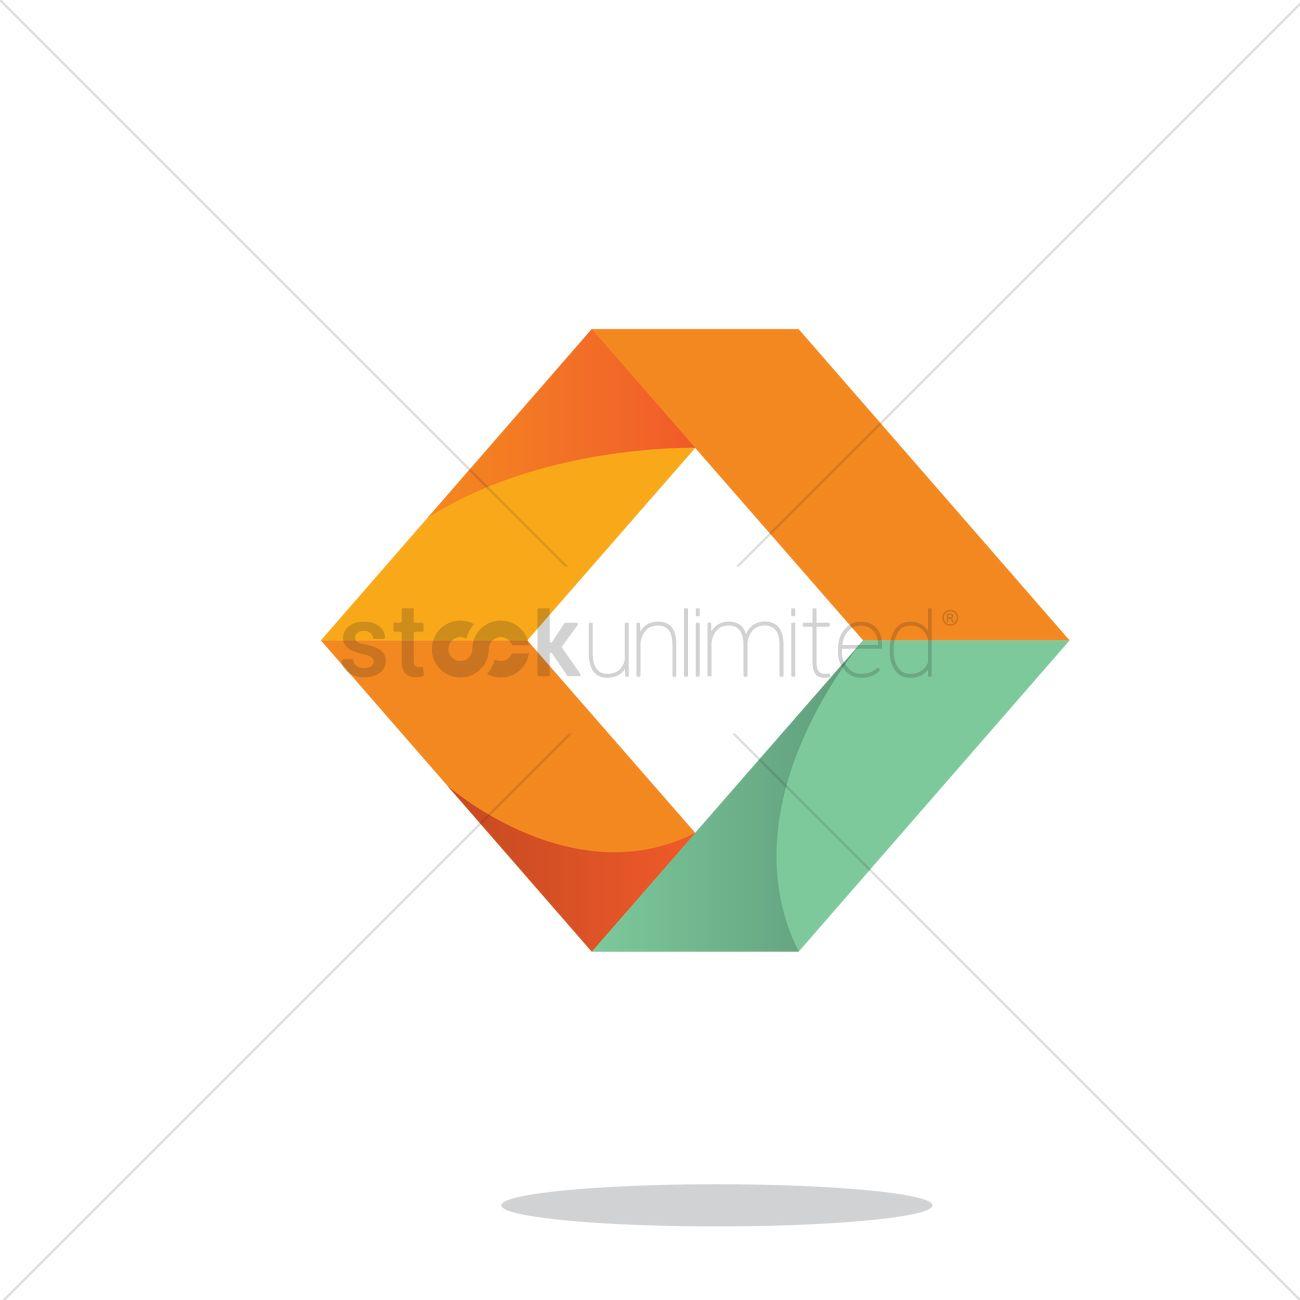 Rhombus Logo - Rhombus logo element Vector Image - 1628228 | StockUnlimited